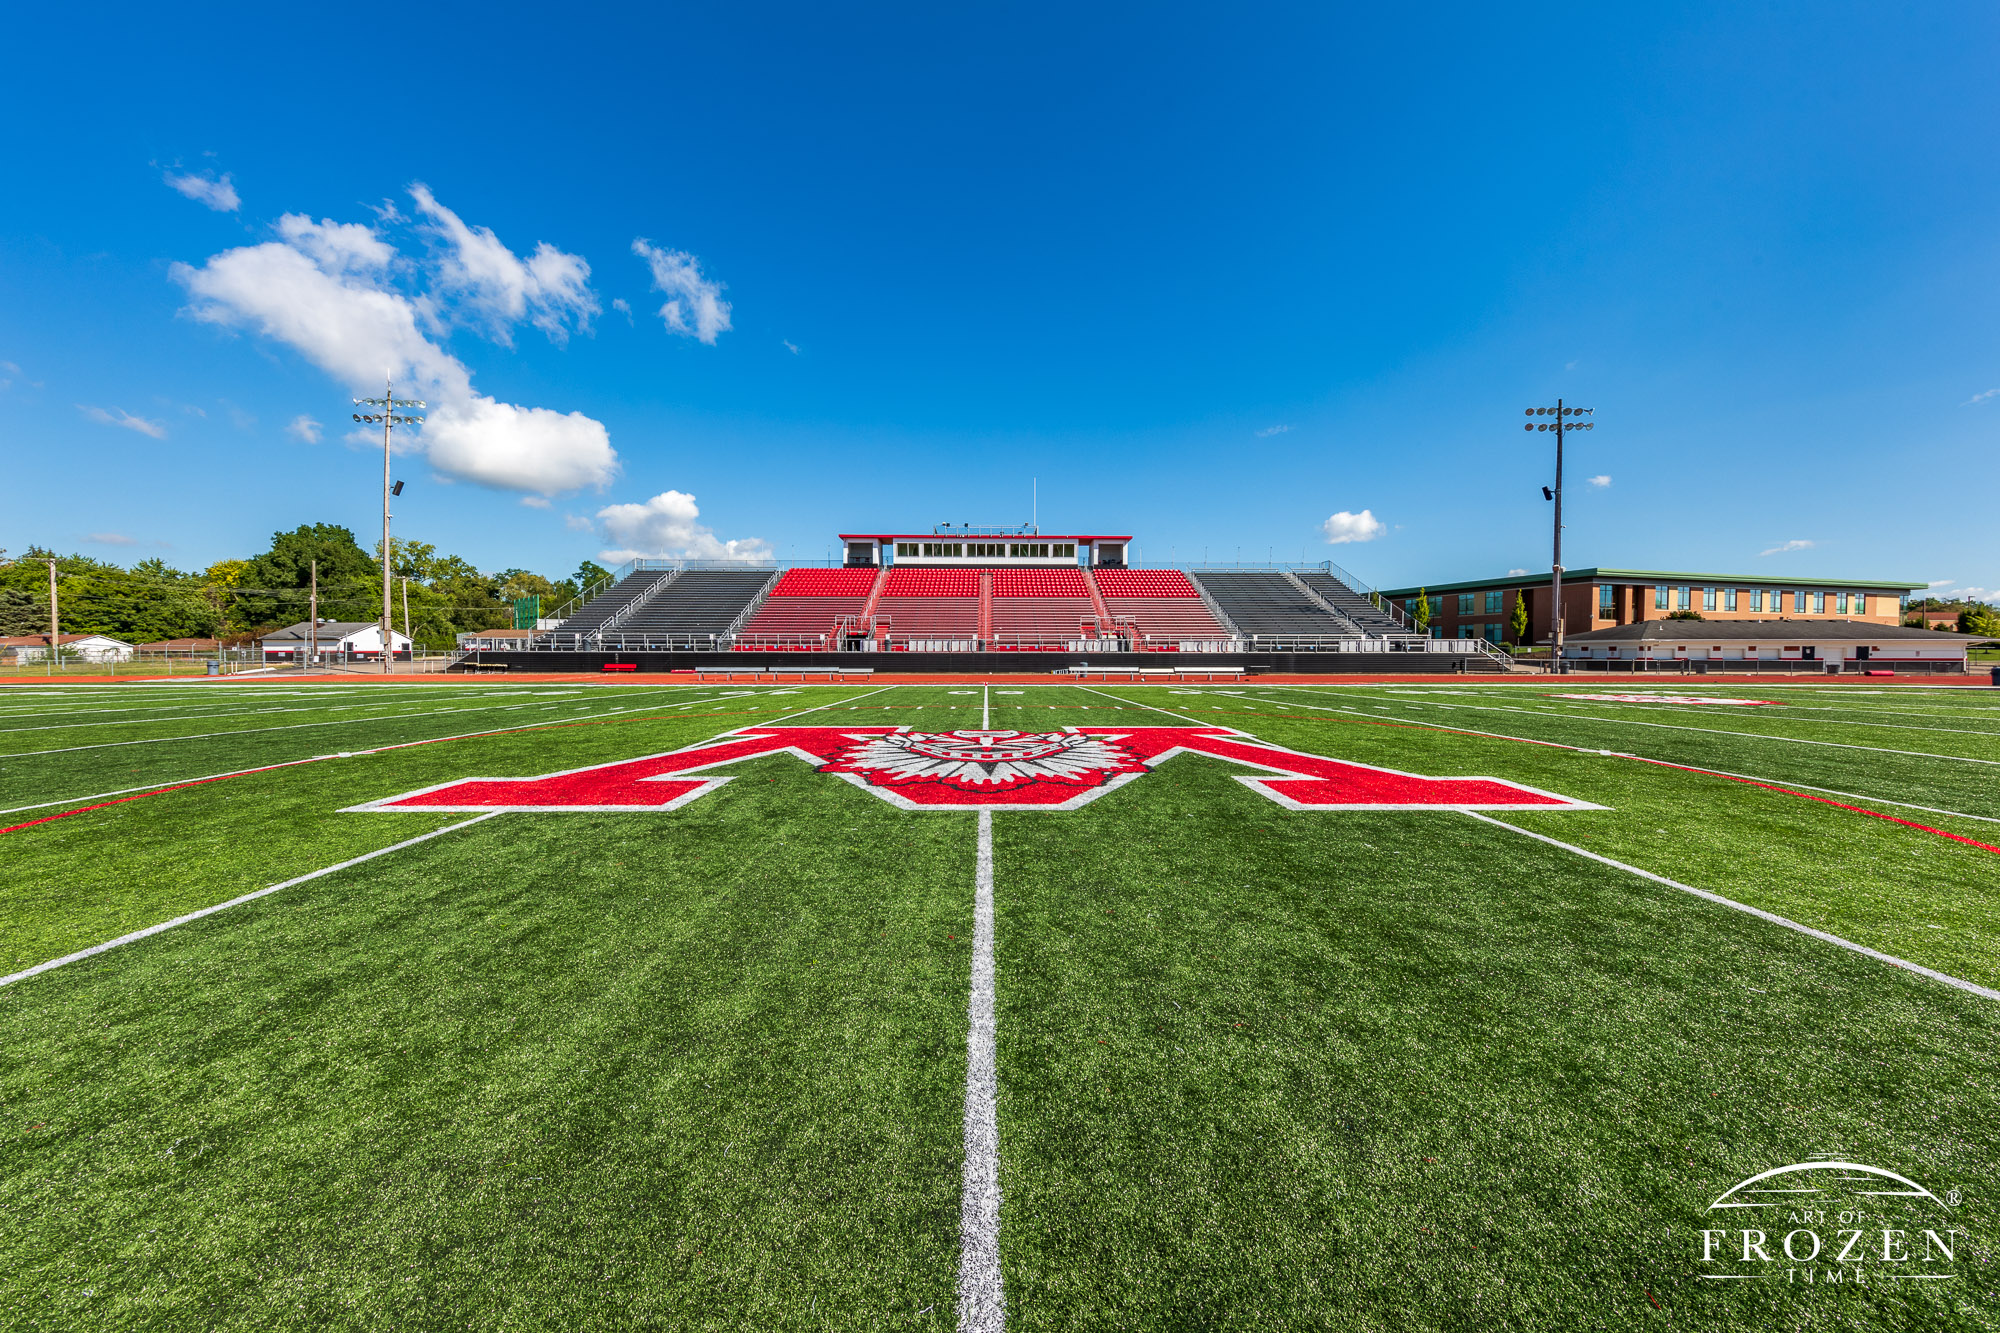 A view of Wayne High School’s Heidkamp Stadium in Huber Heights, Ohio featuring its Wayne Warrior Mascot spread across the 50-yard line under blue skies